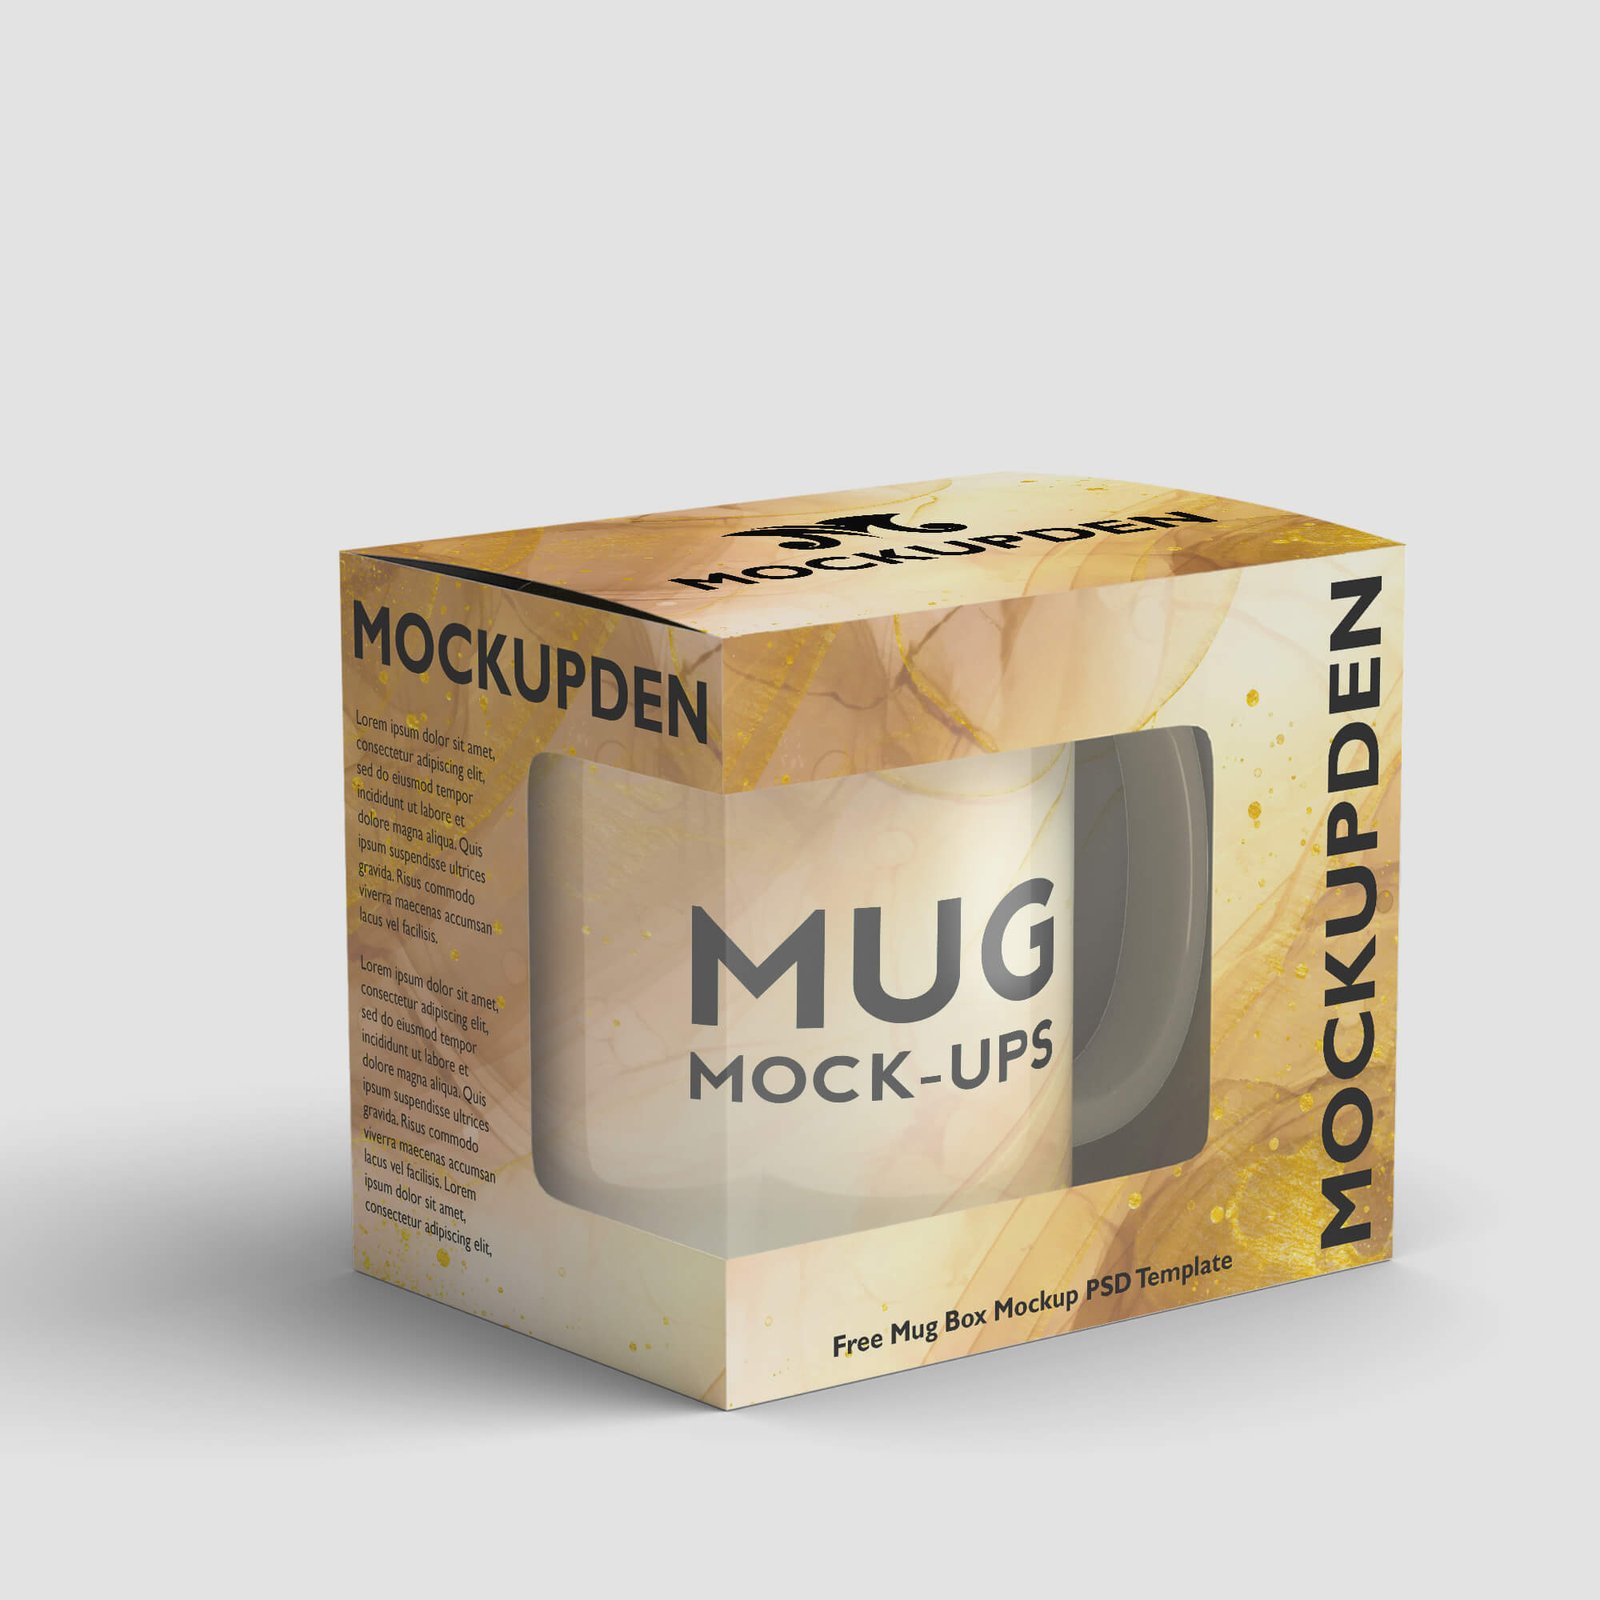 Free Mug Box Mockup PSD Template Mockup Den